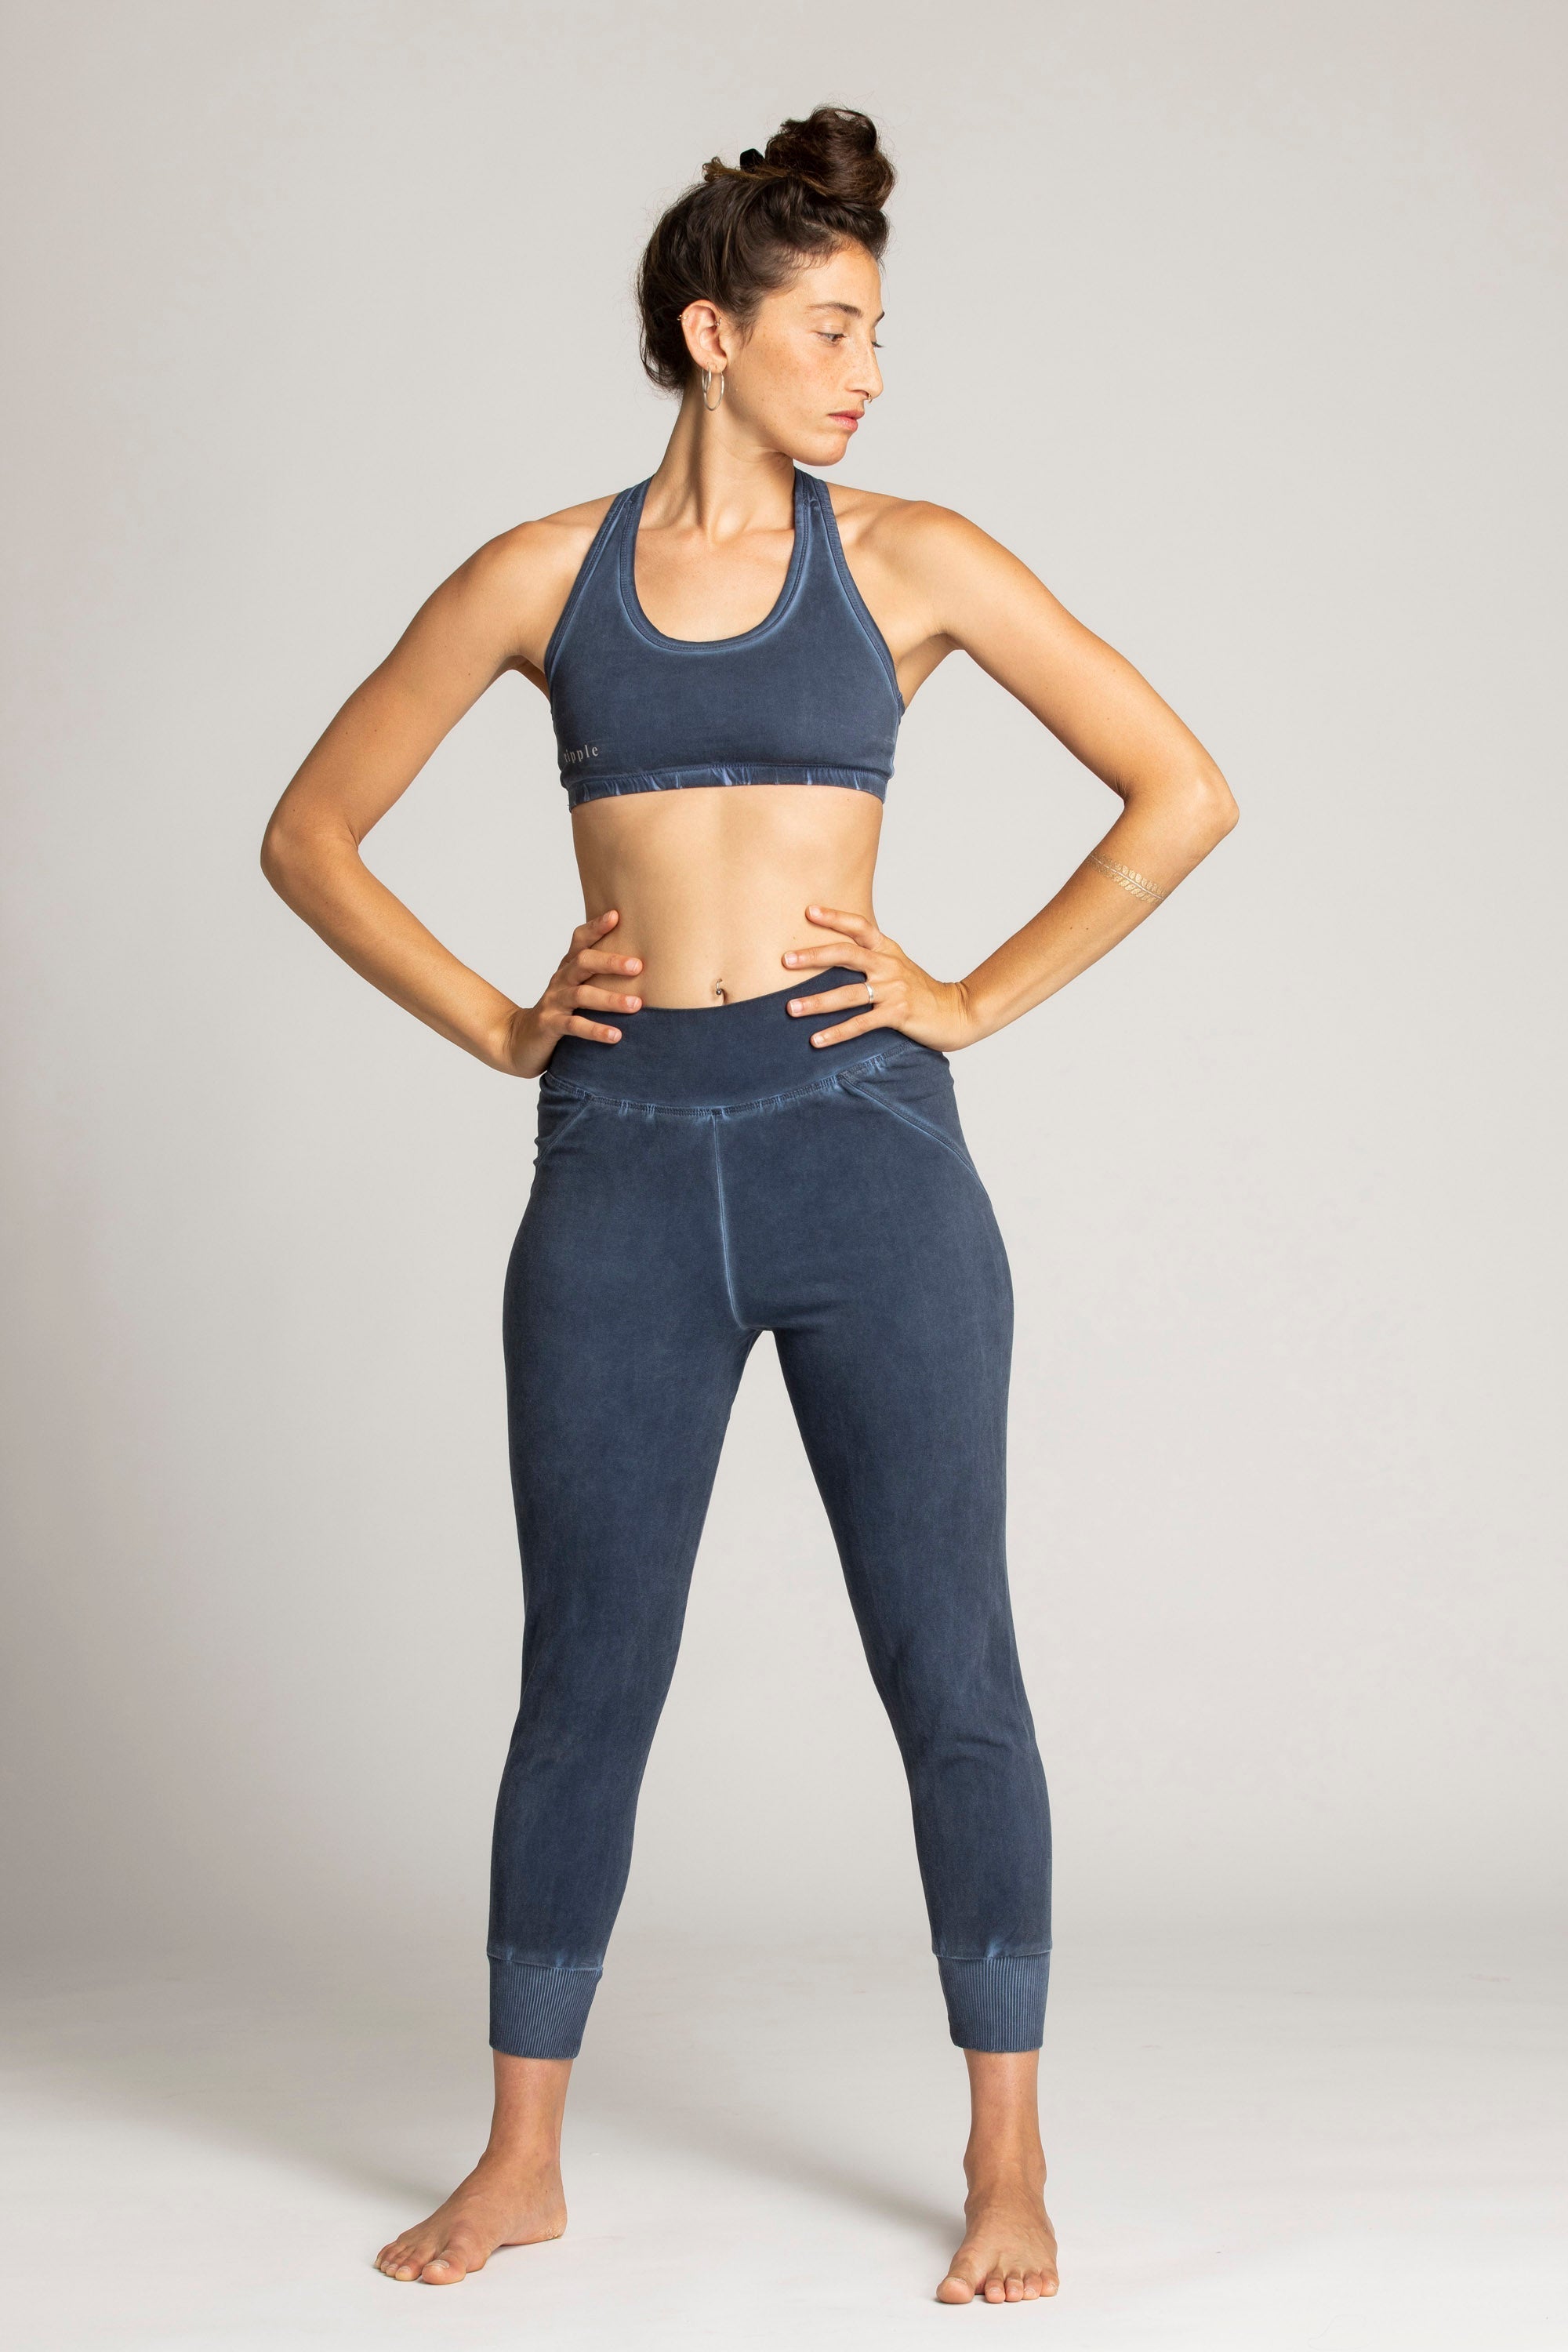 Yoga Pants & Shorts | Womens Clothing | Ripple Yoga Wear